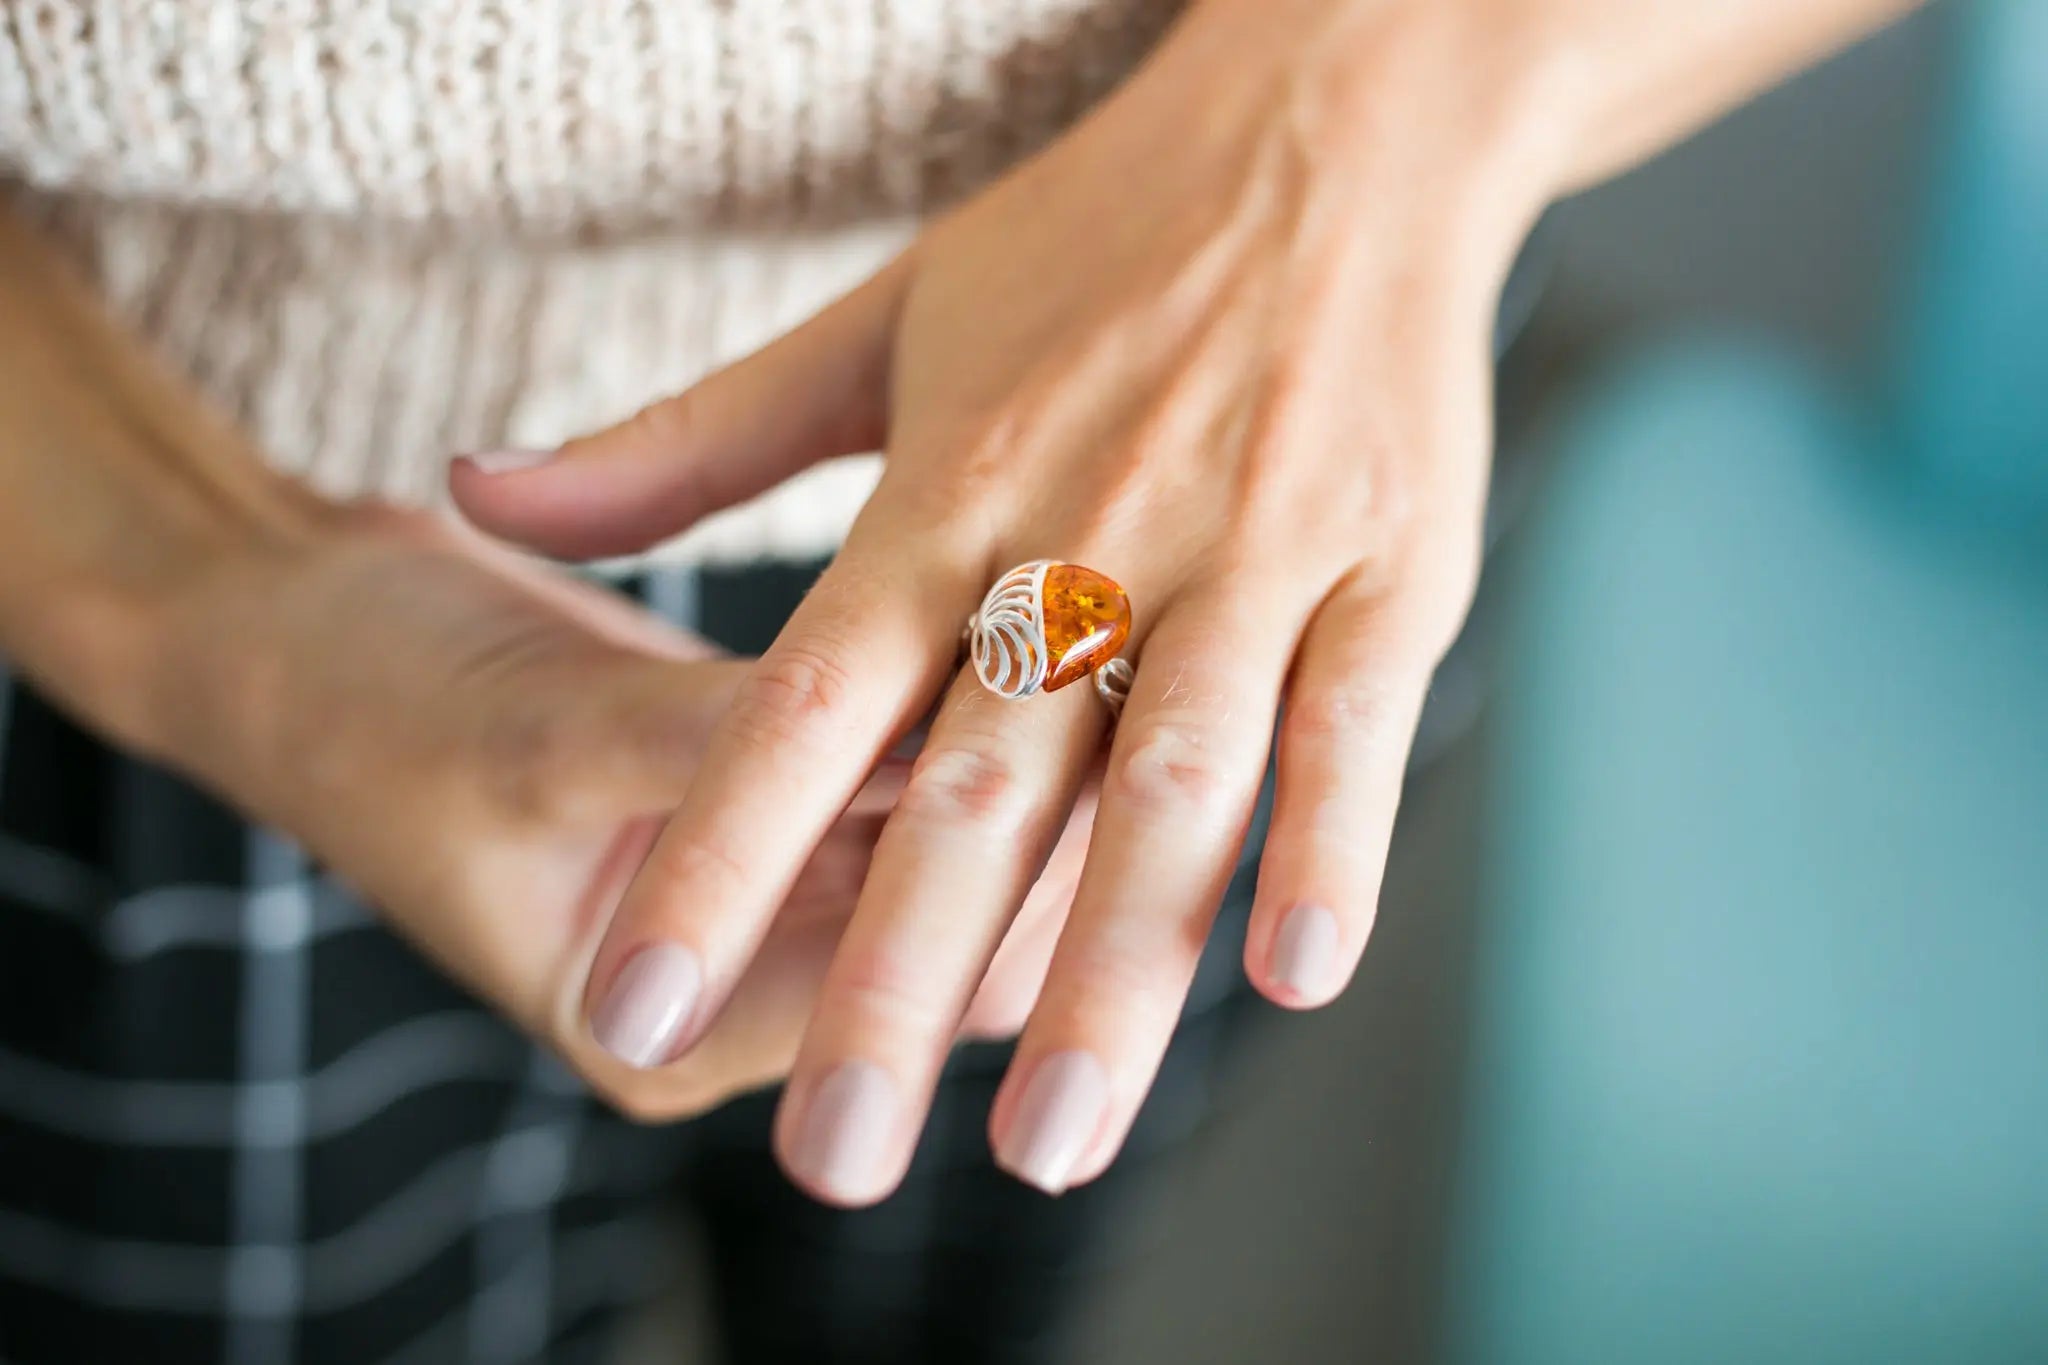 Shell Frame Amber Ring- Rings- Baltic Beauty